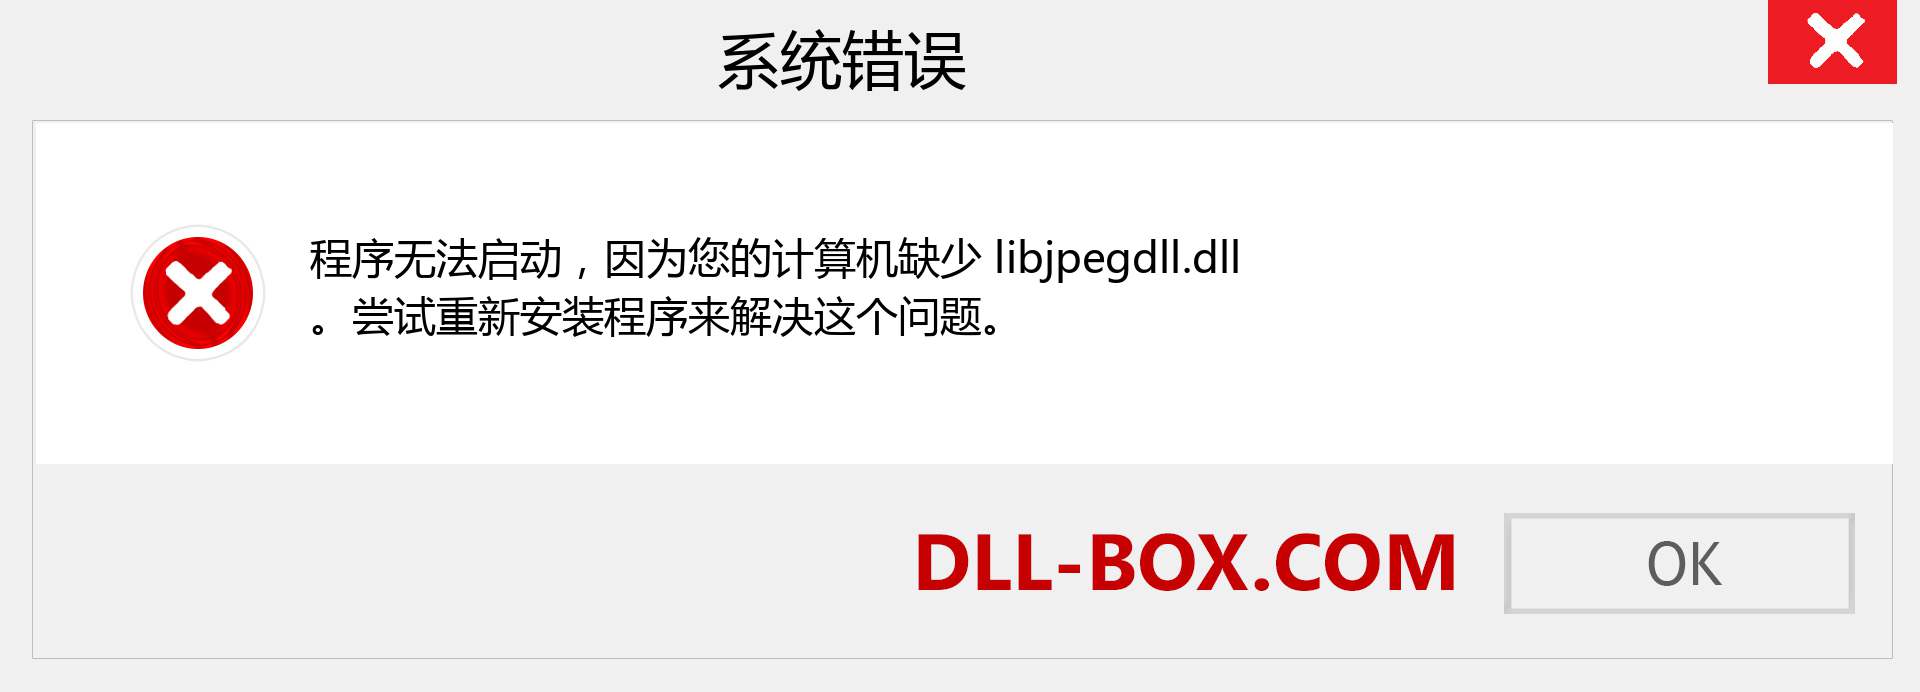 libjpegdll.dll 文件丢失？。 适用于 Windows 7、8、10 的下载 - 修复 Windows、照片、图像上的 libjpegdll dll 丢失错误